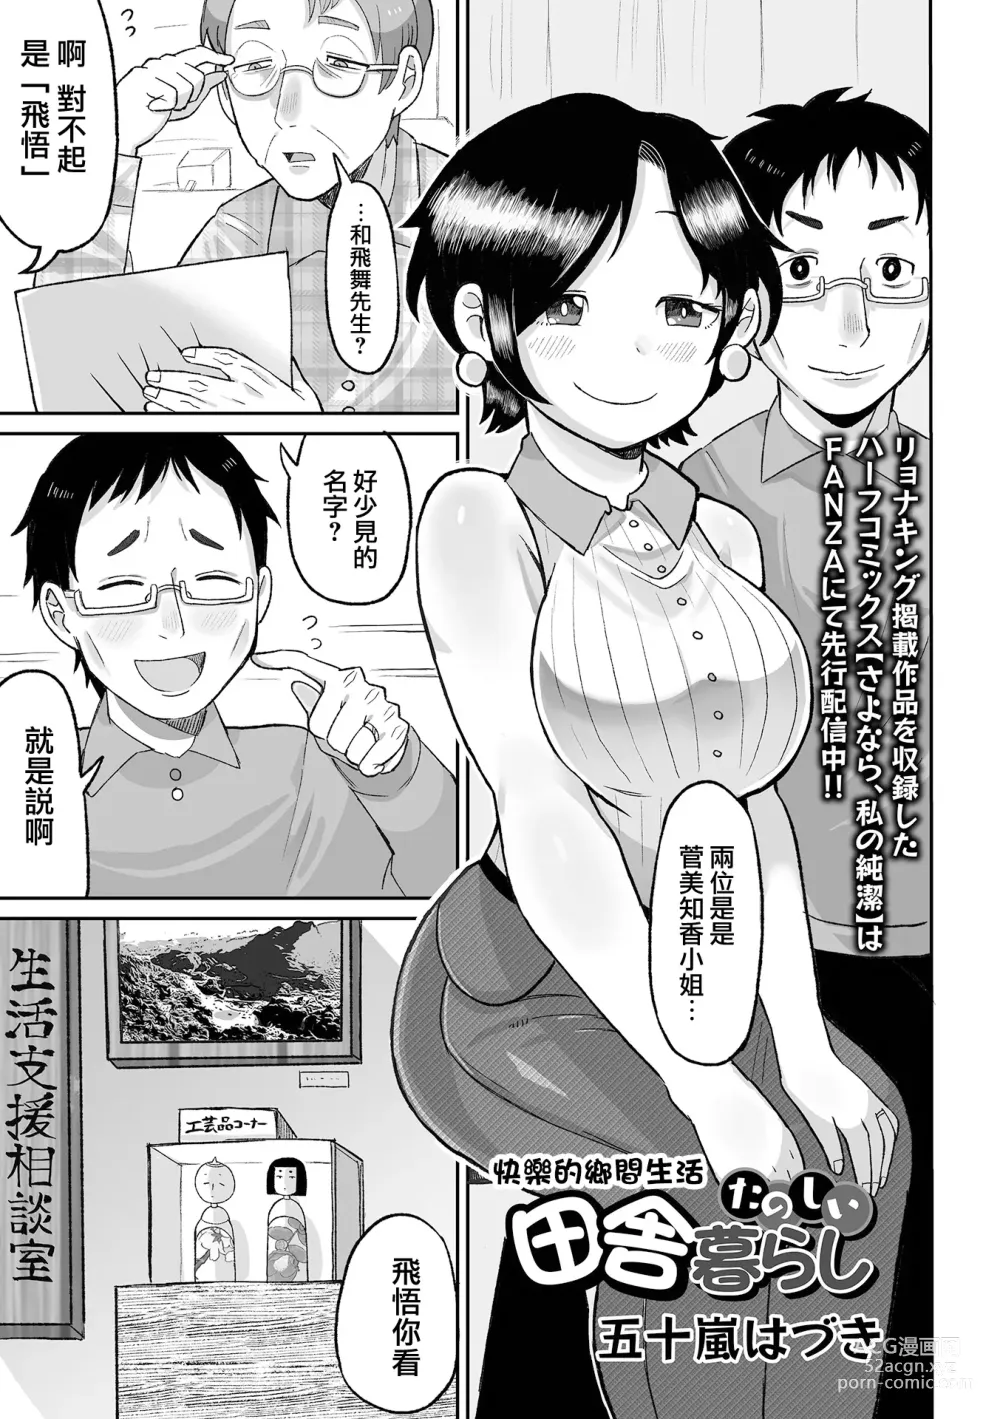 Page 2 of manga 快樂的鄉間生活